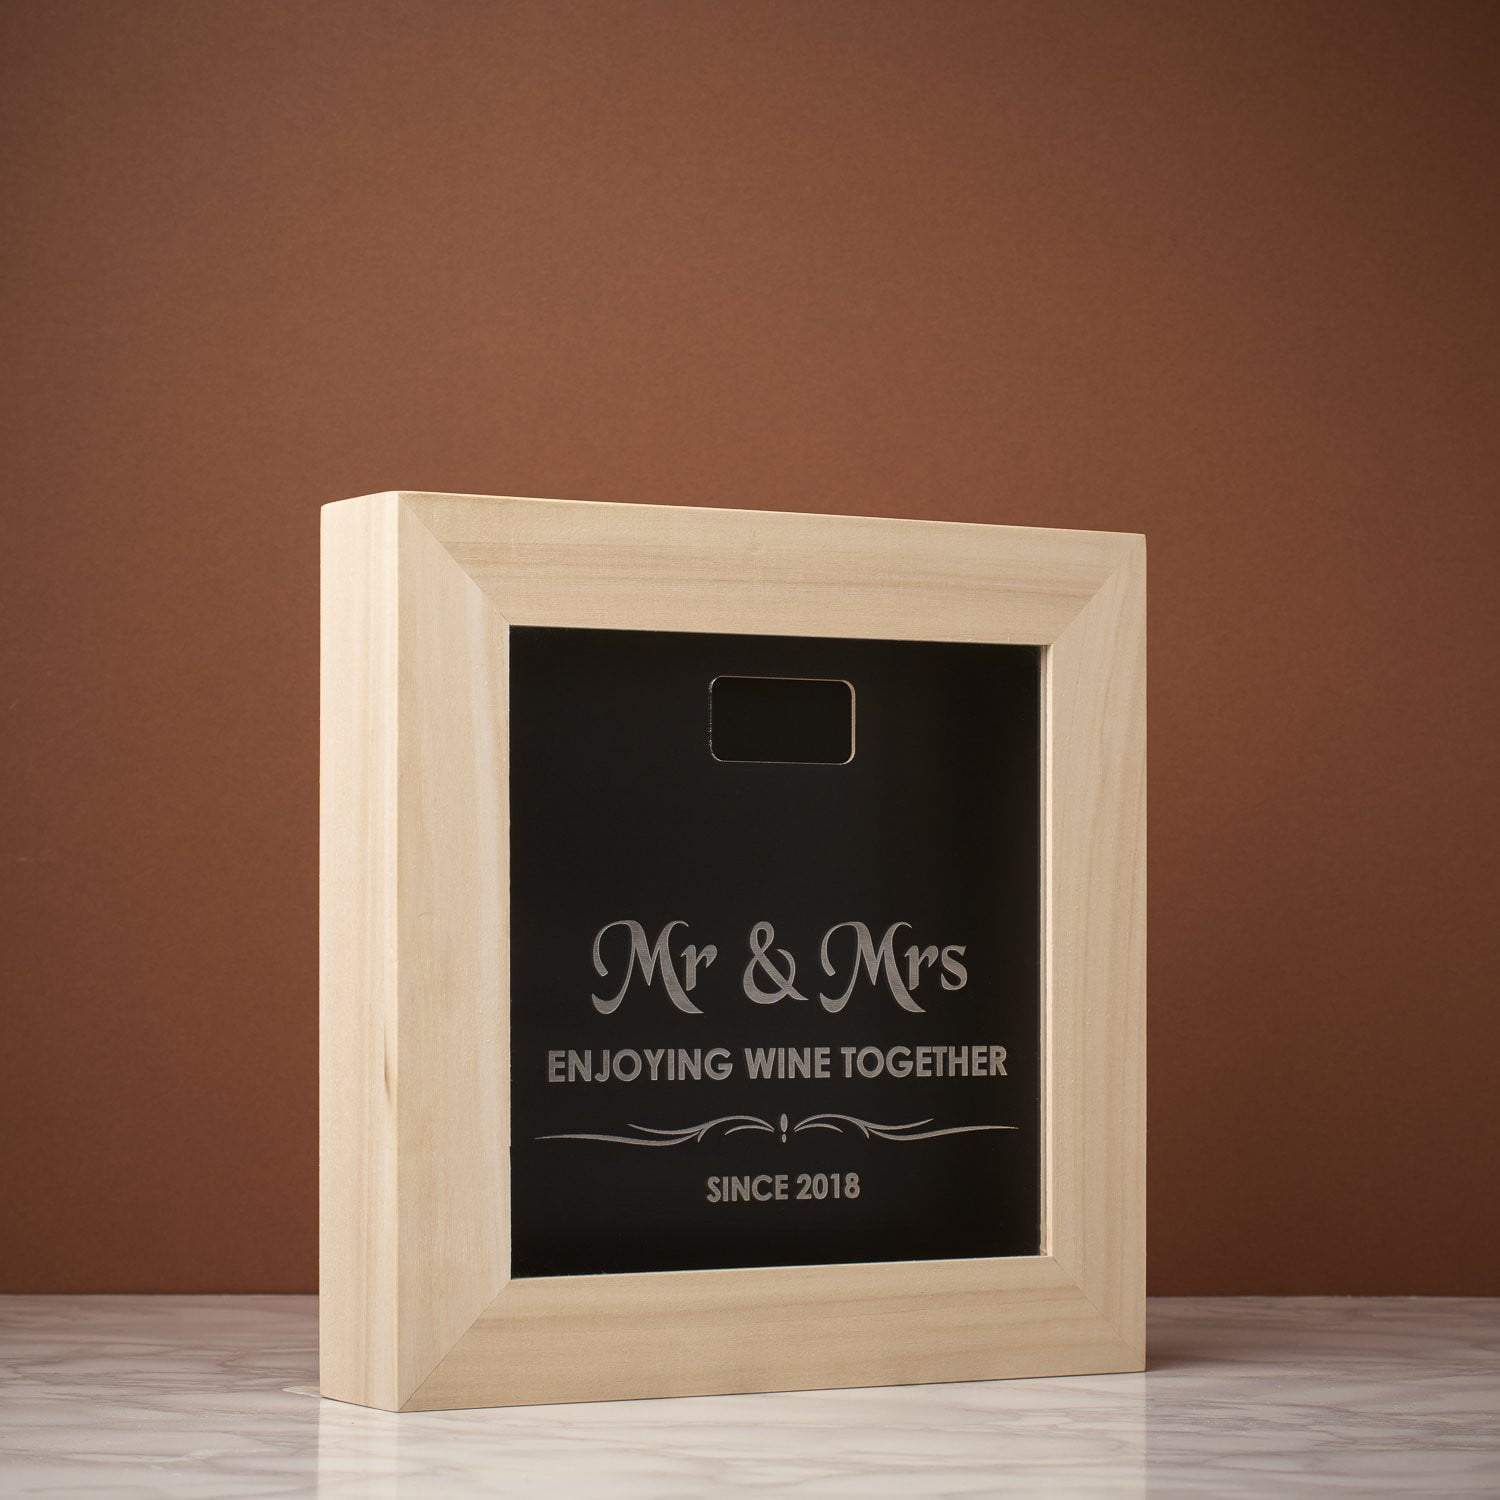 Memory Box Frame - Mr & Mrs Enjoying Since Memory Box Frame